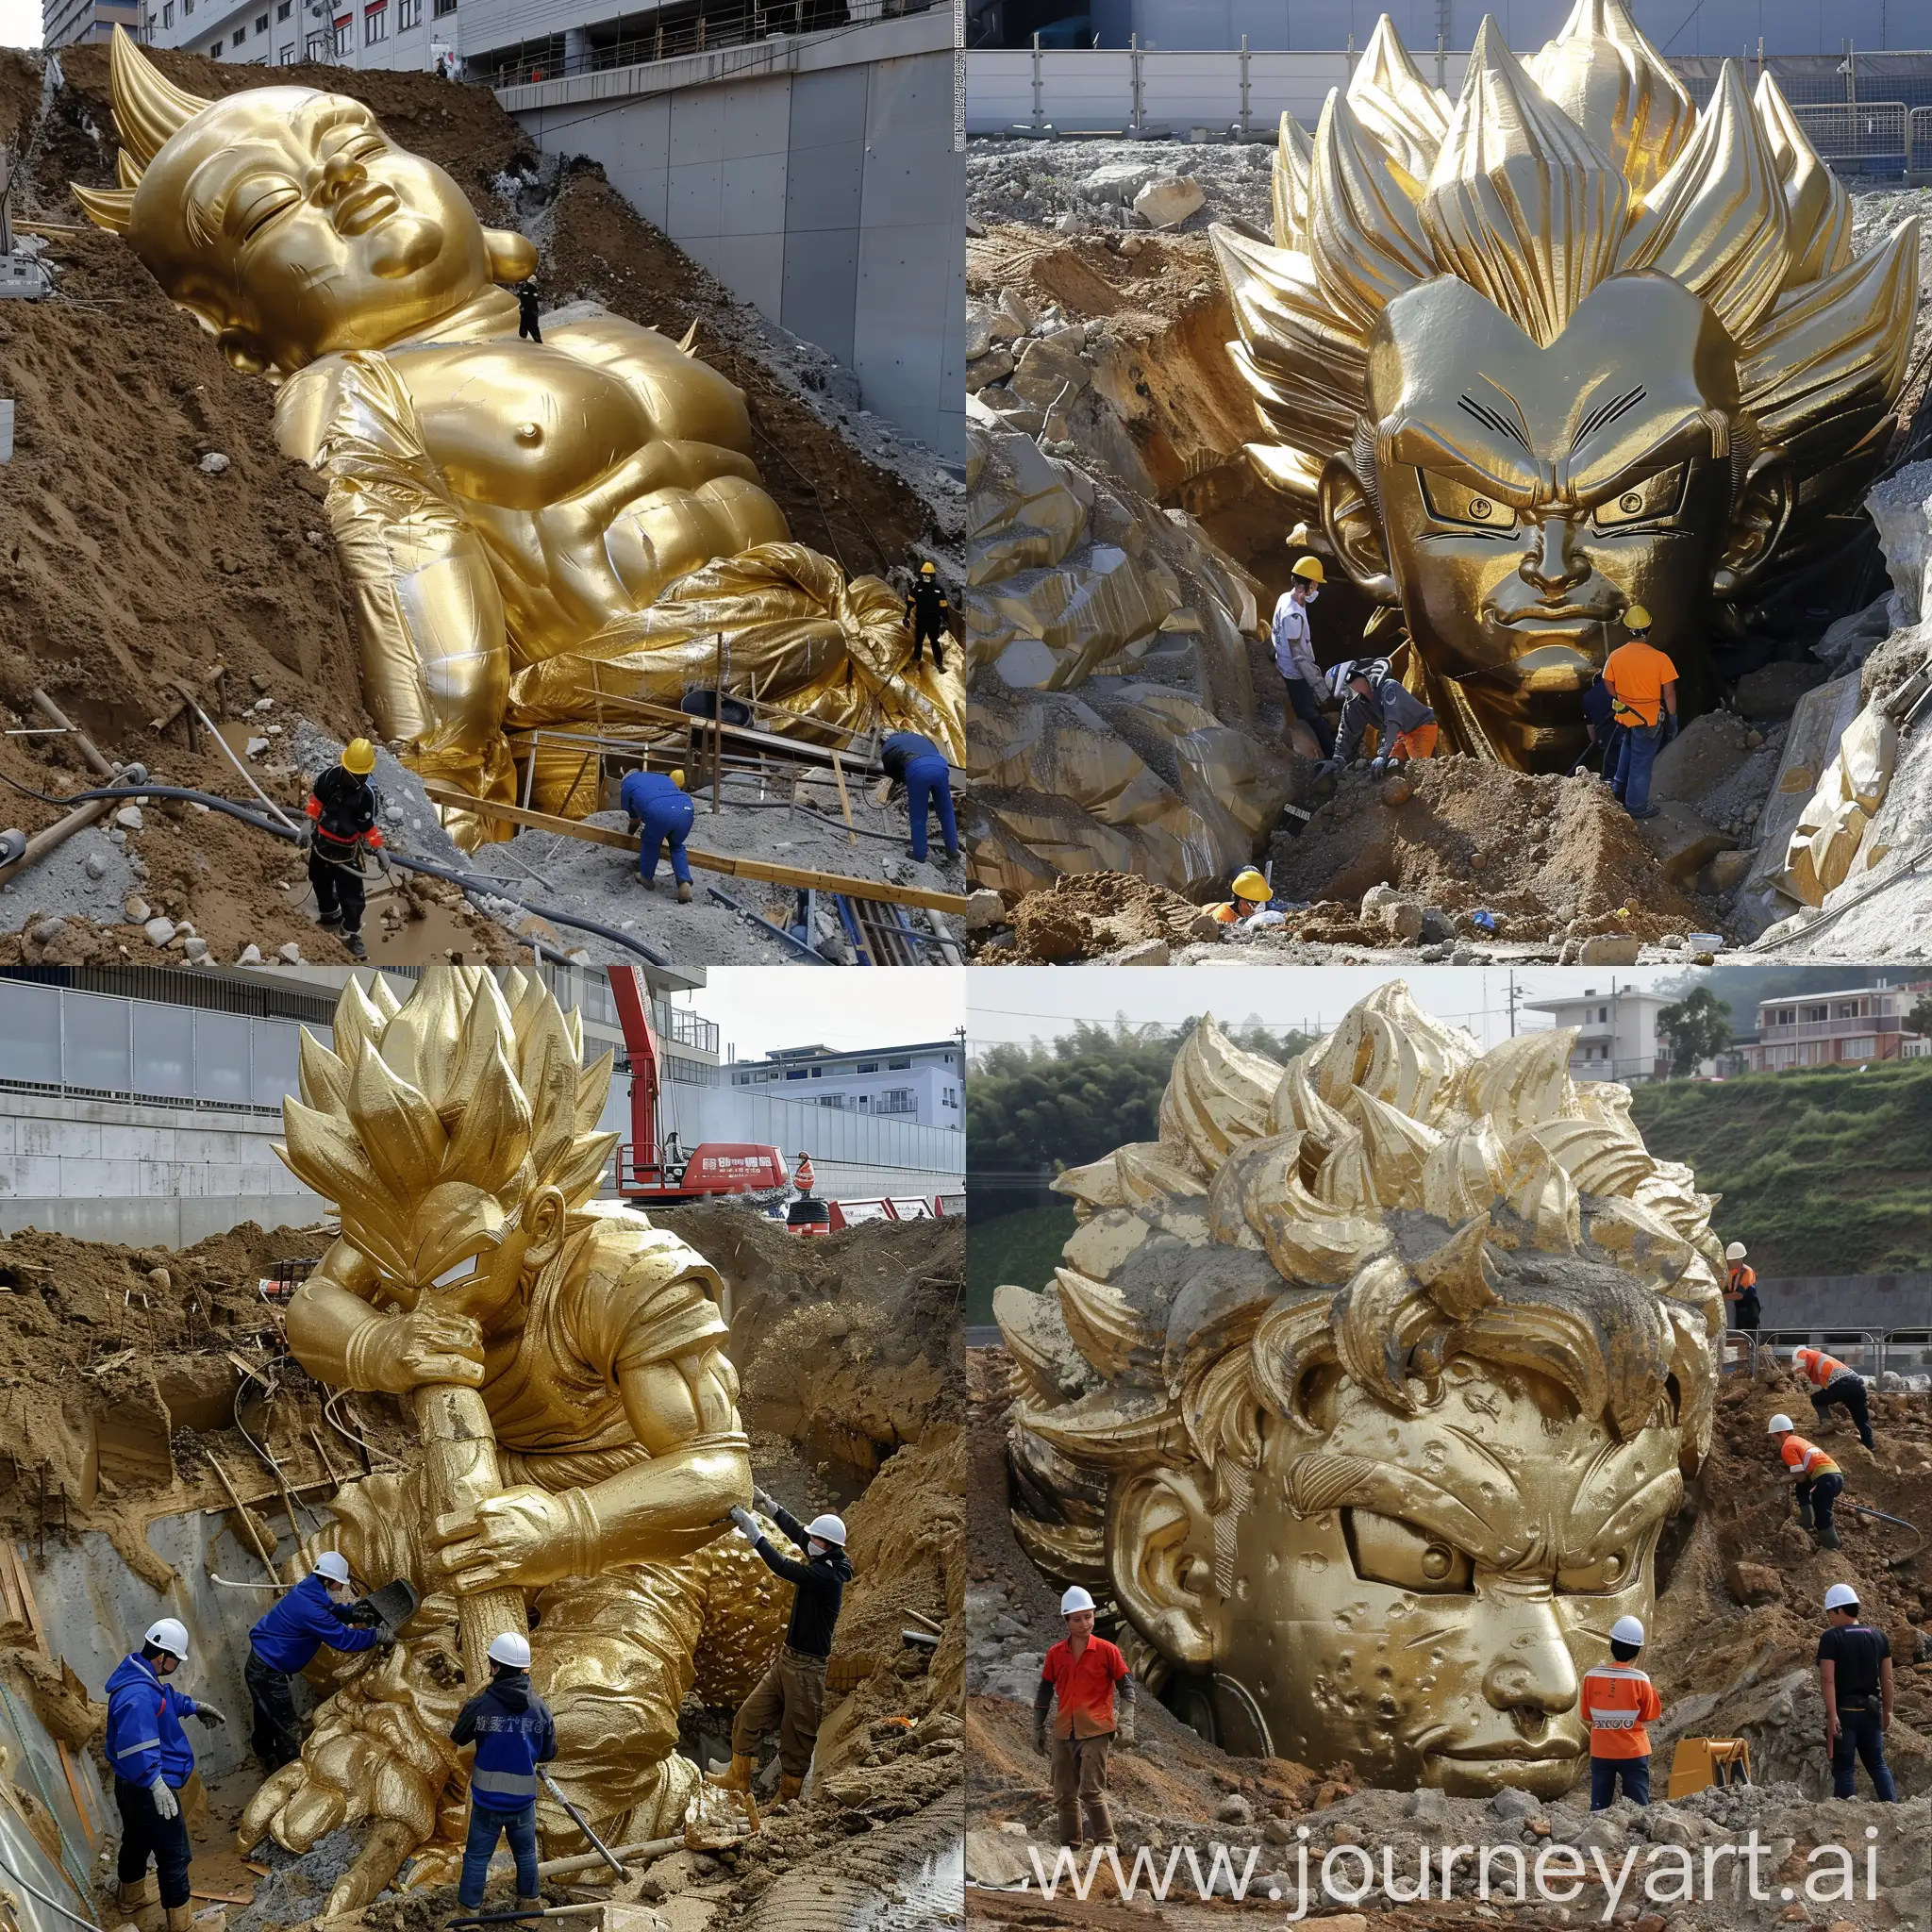 Workers digging out a massive Akira toriyama golden statue, photo